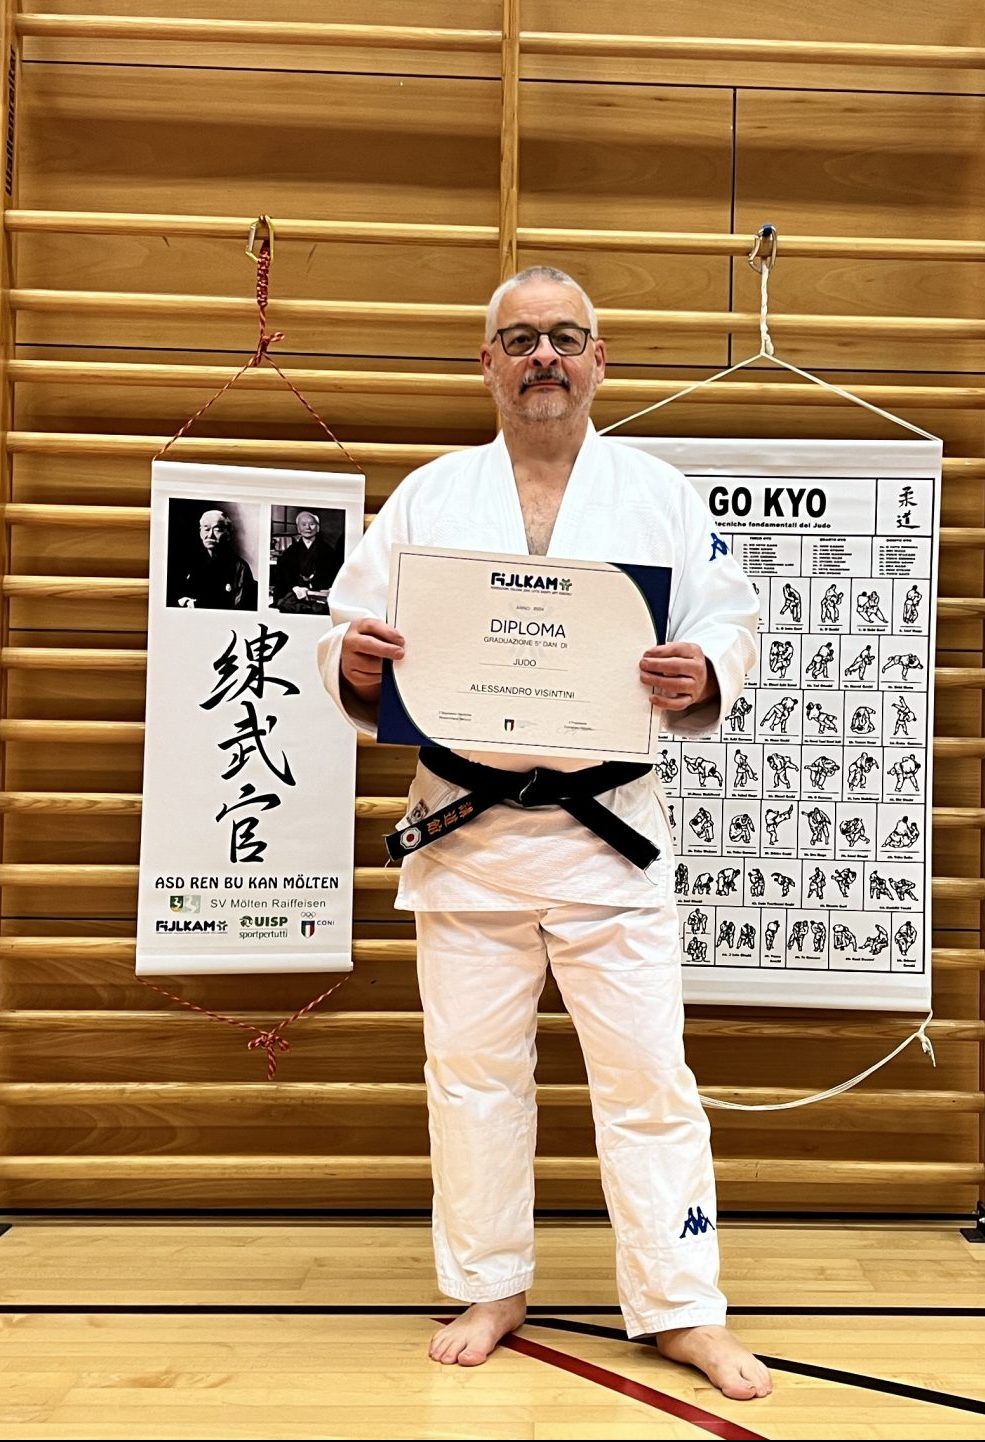 Alessandro visintini maestro 5. Dan judo fijlkam